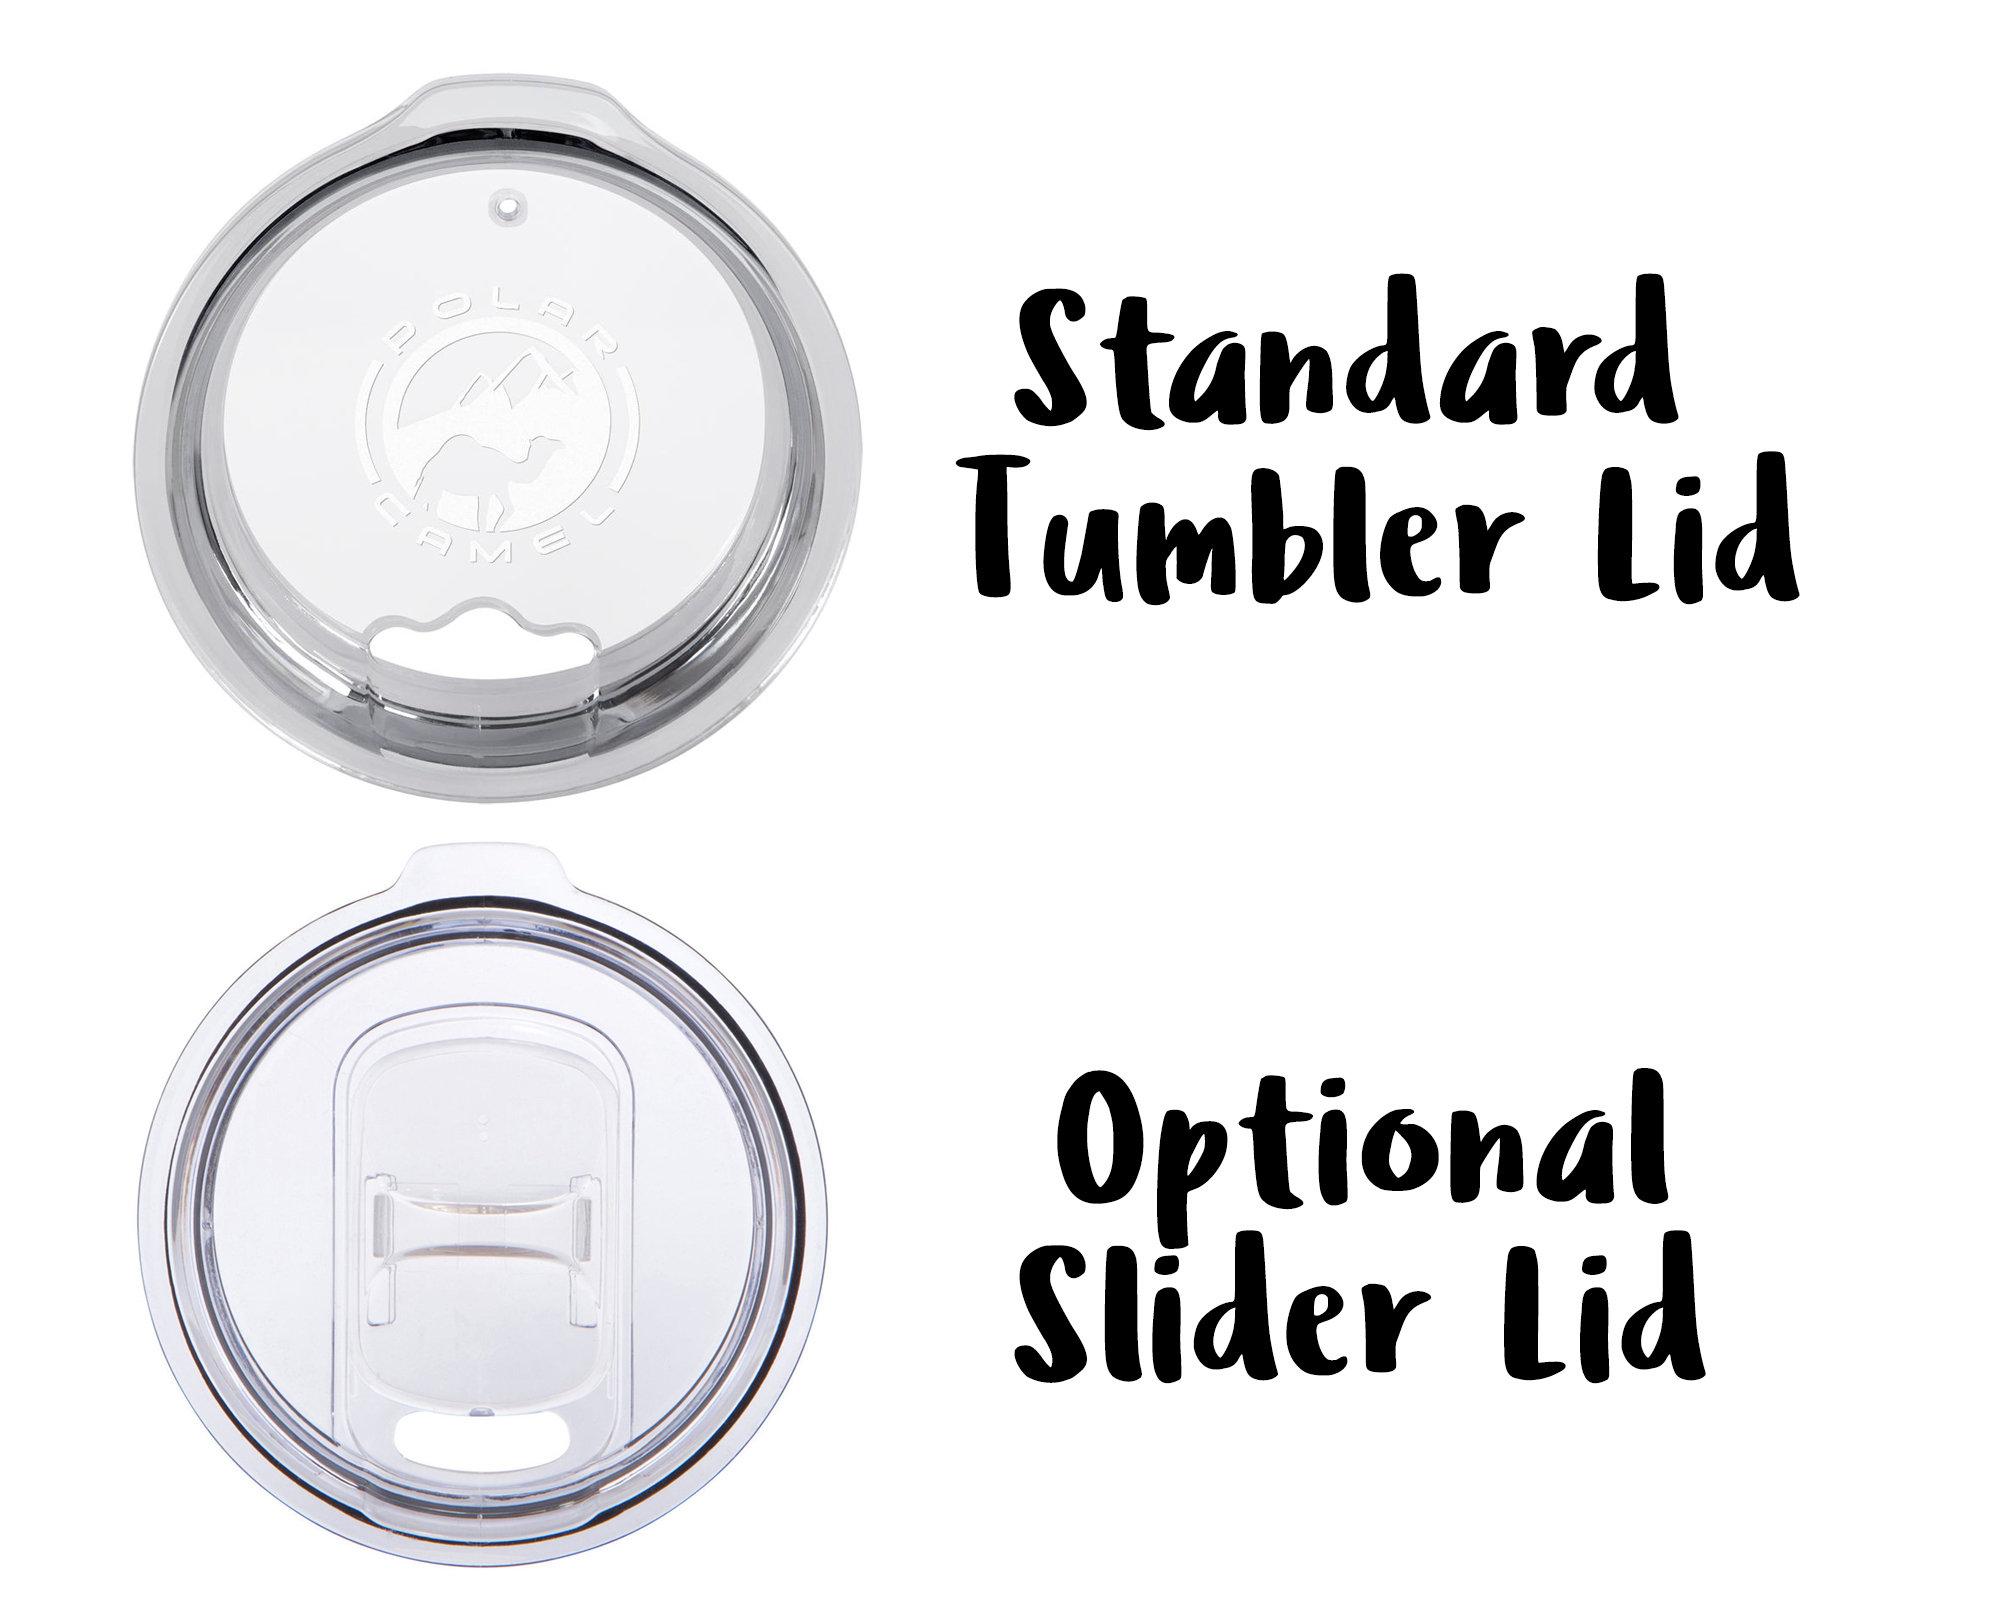 Locating replacement tumbler lid : r/starbucks